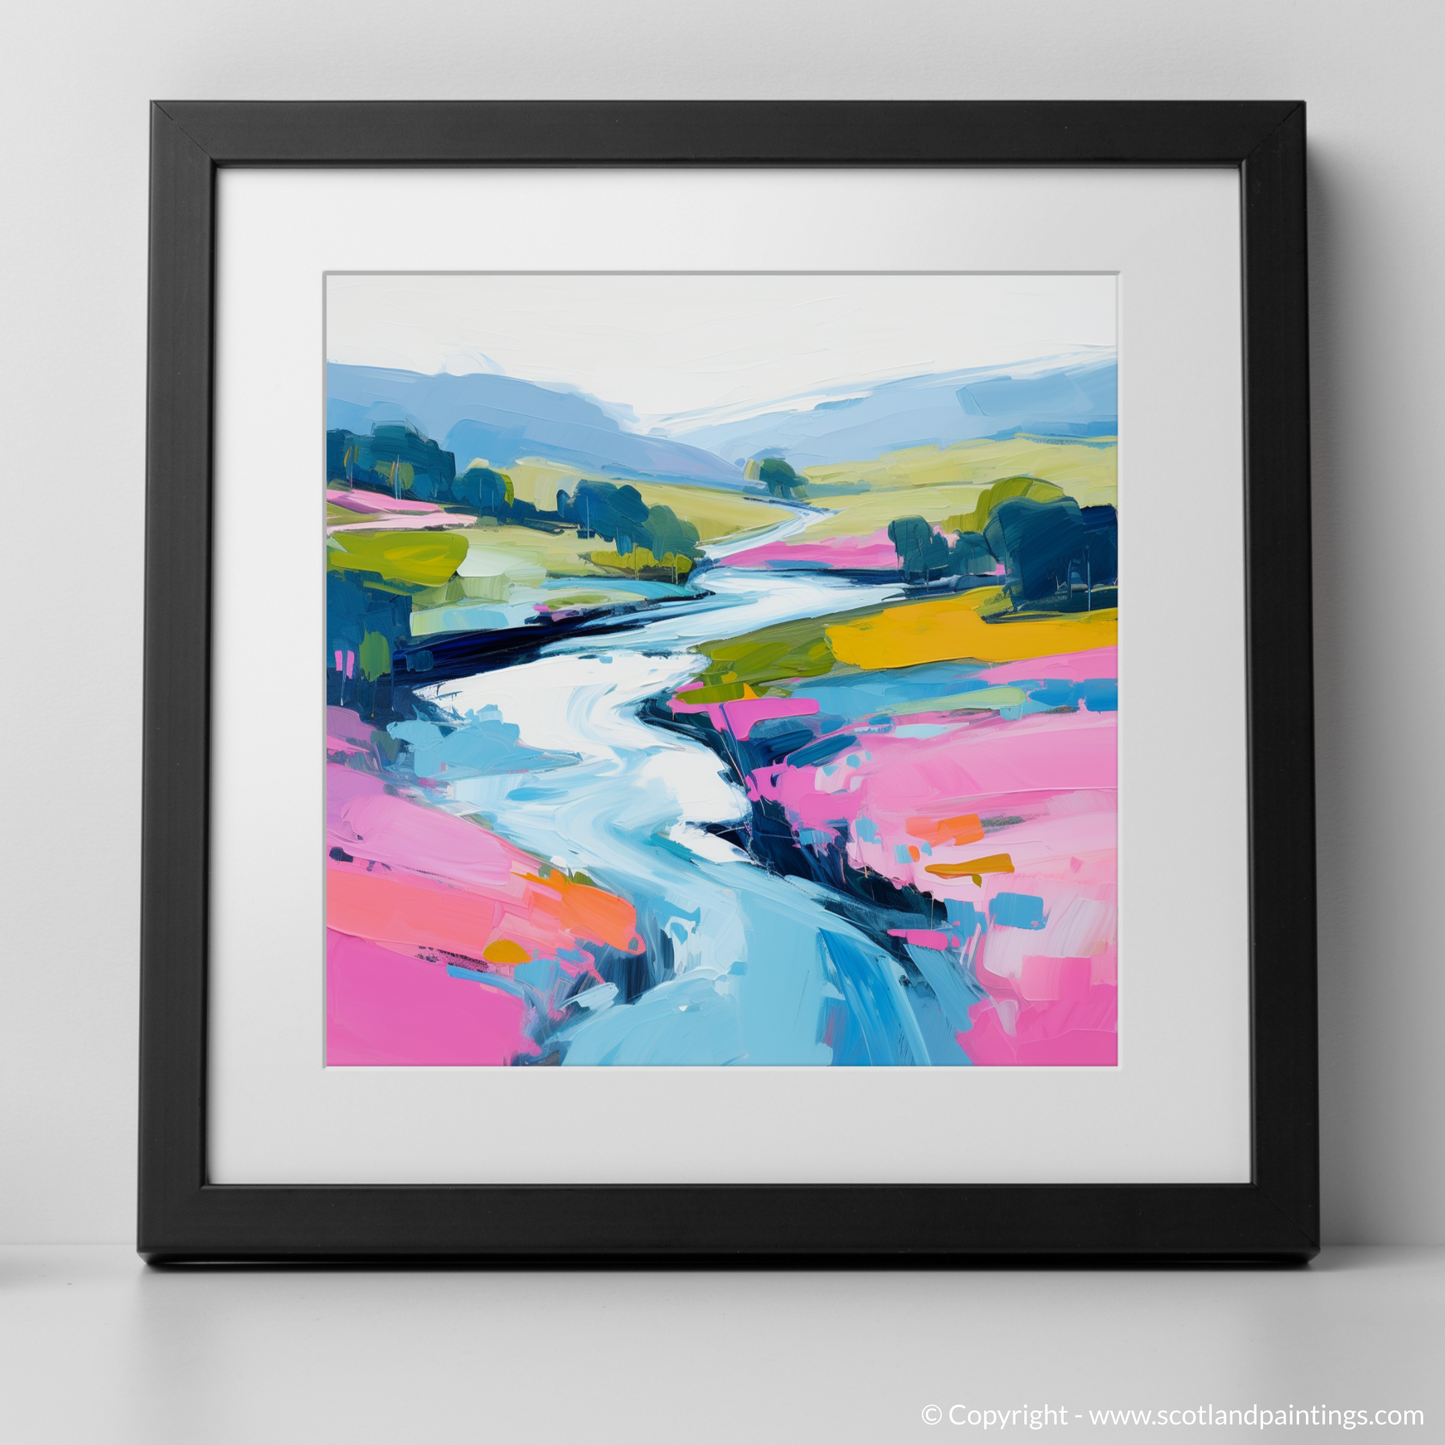 Art Print of River Garry, Highlands in summer with a black frame